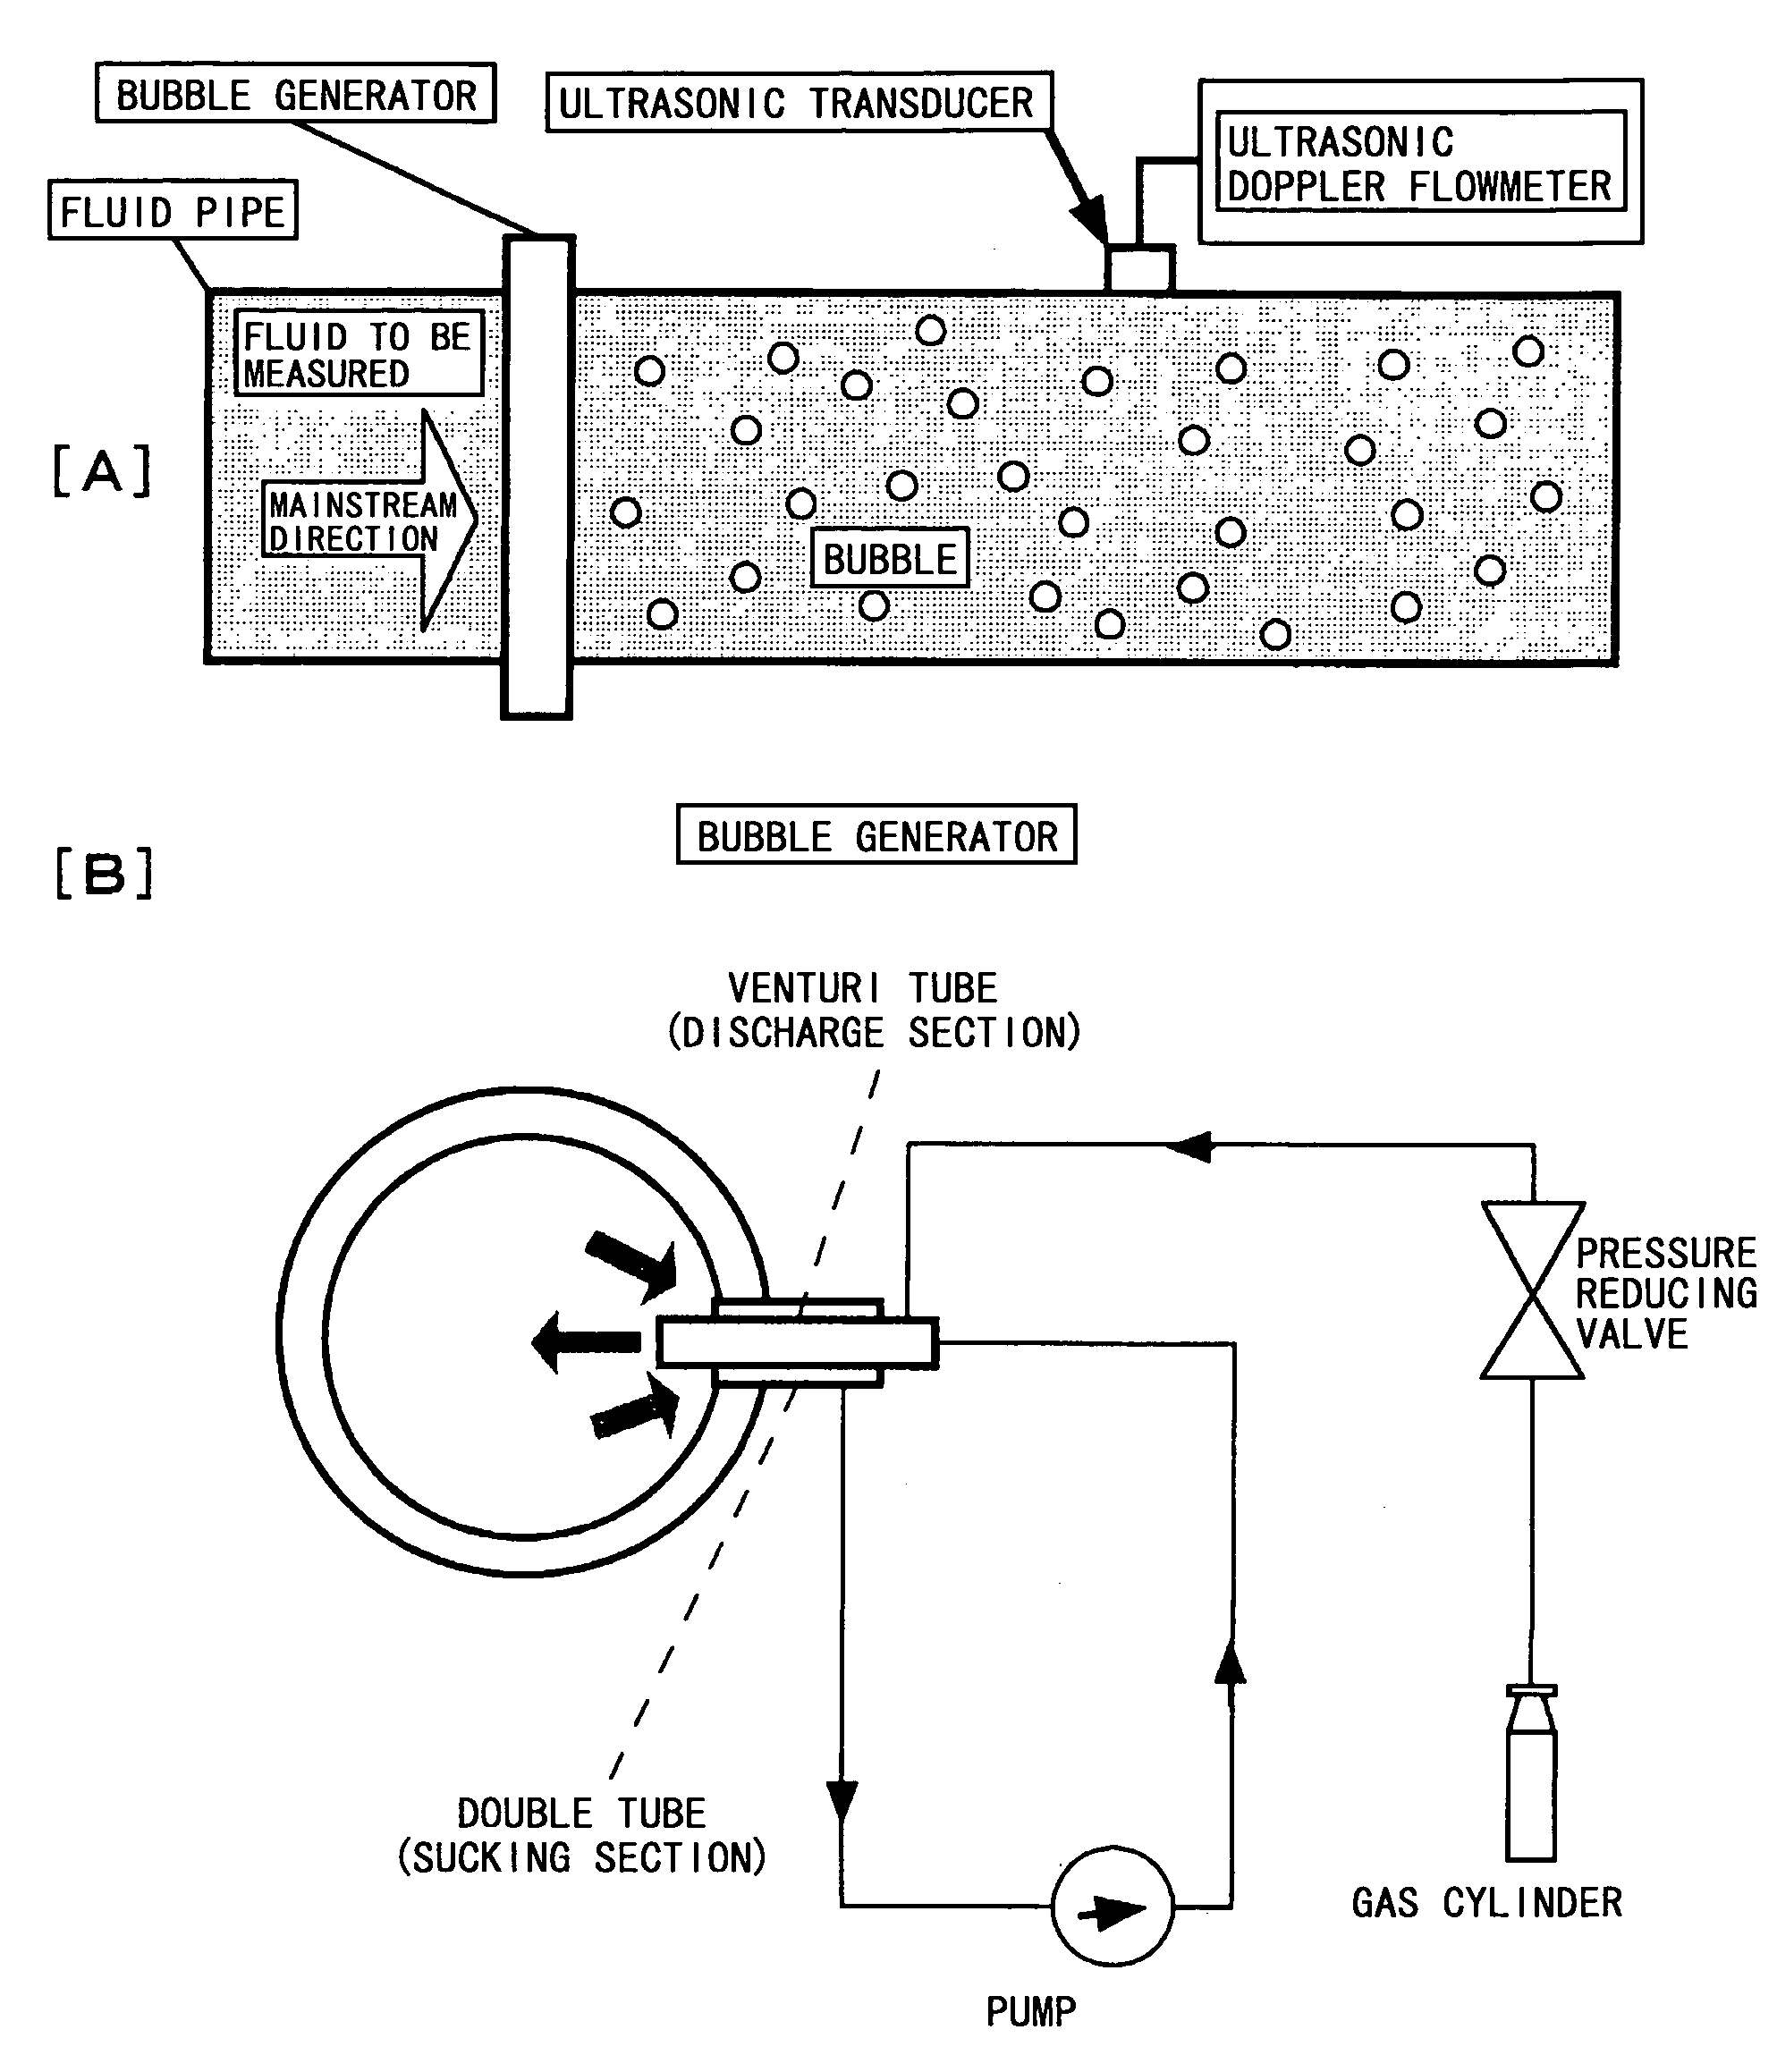 Bubble generator for use in doppler ultrasonic flowmeter and doppler ultrasonic flowmeter